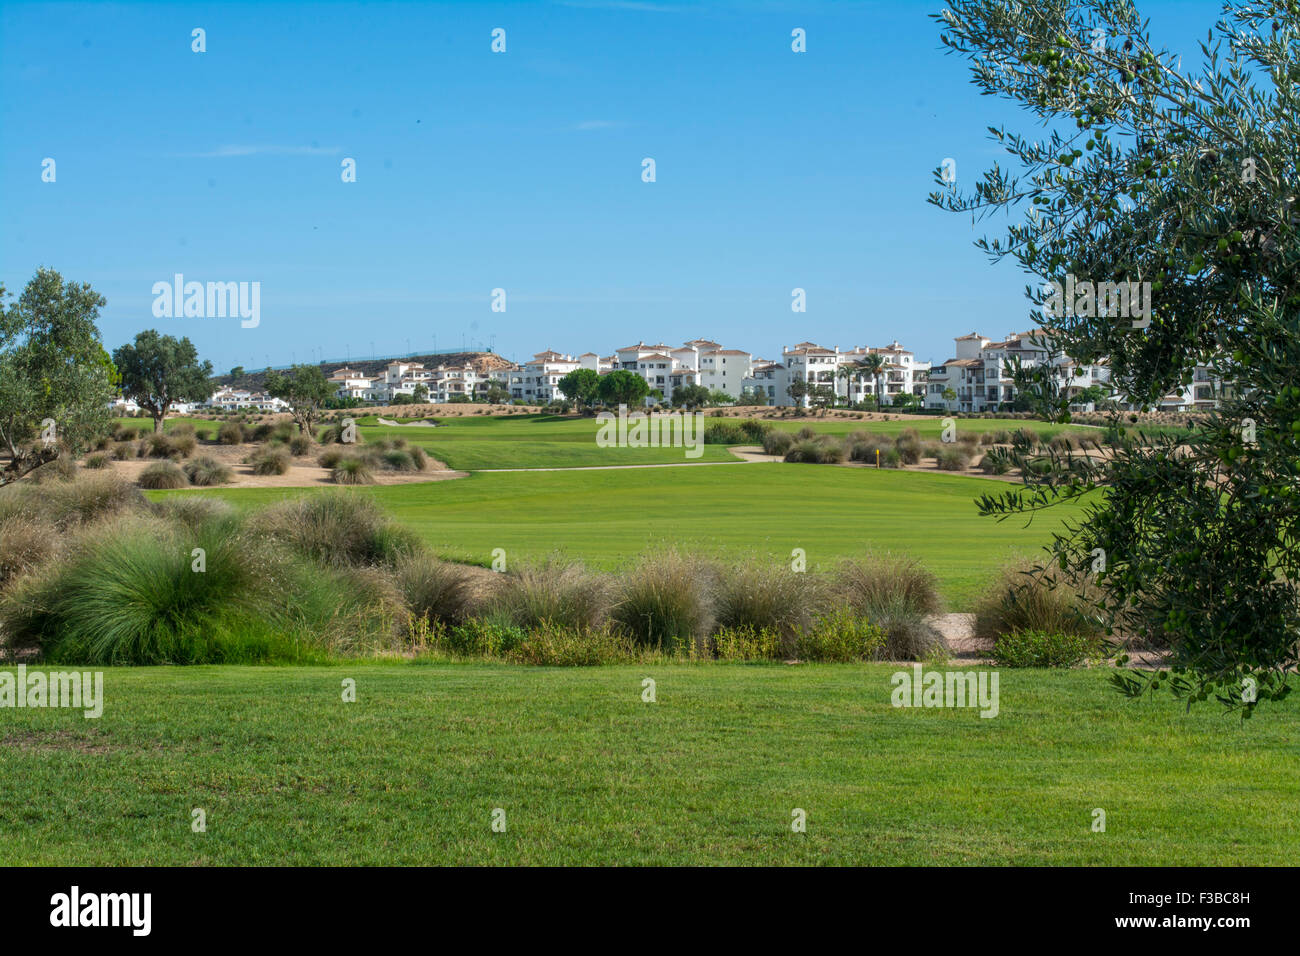 Olive Tree & Views of the Golf Course at Hacienda Riquelme Golf Resort,  Murcia, Spain Stock Photo - Alamy